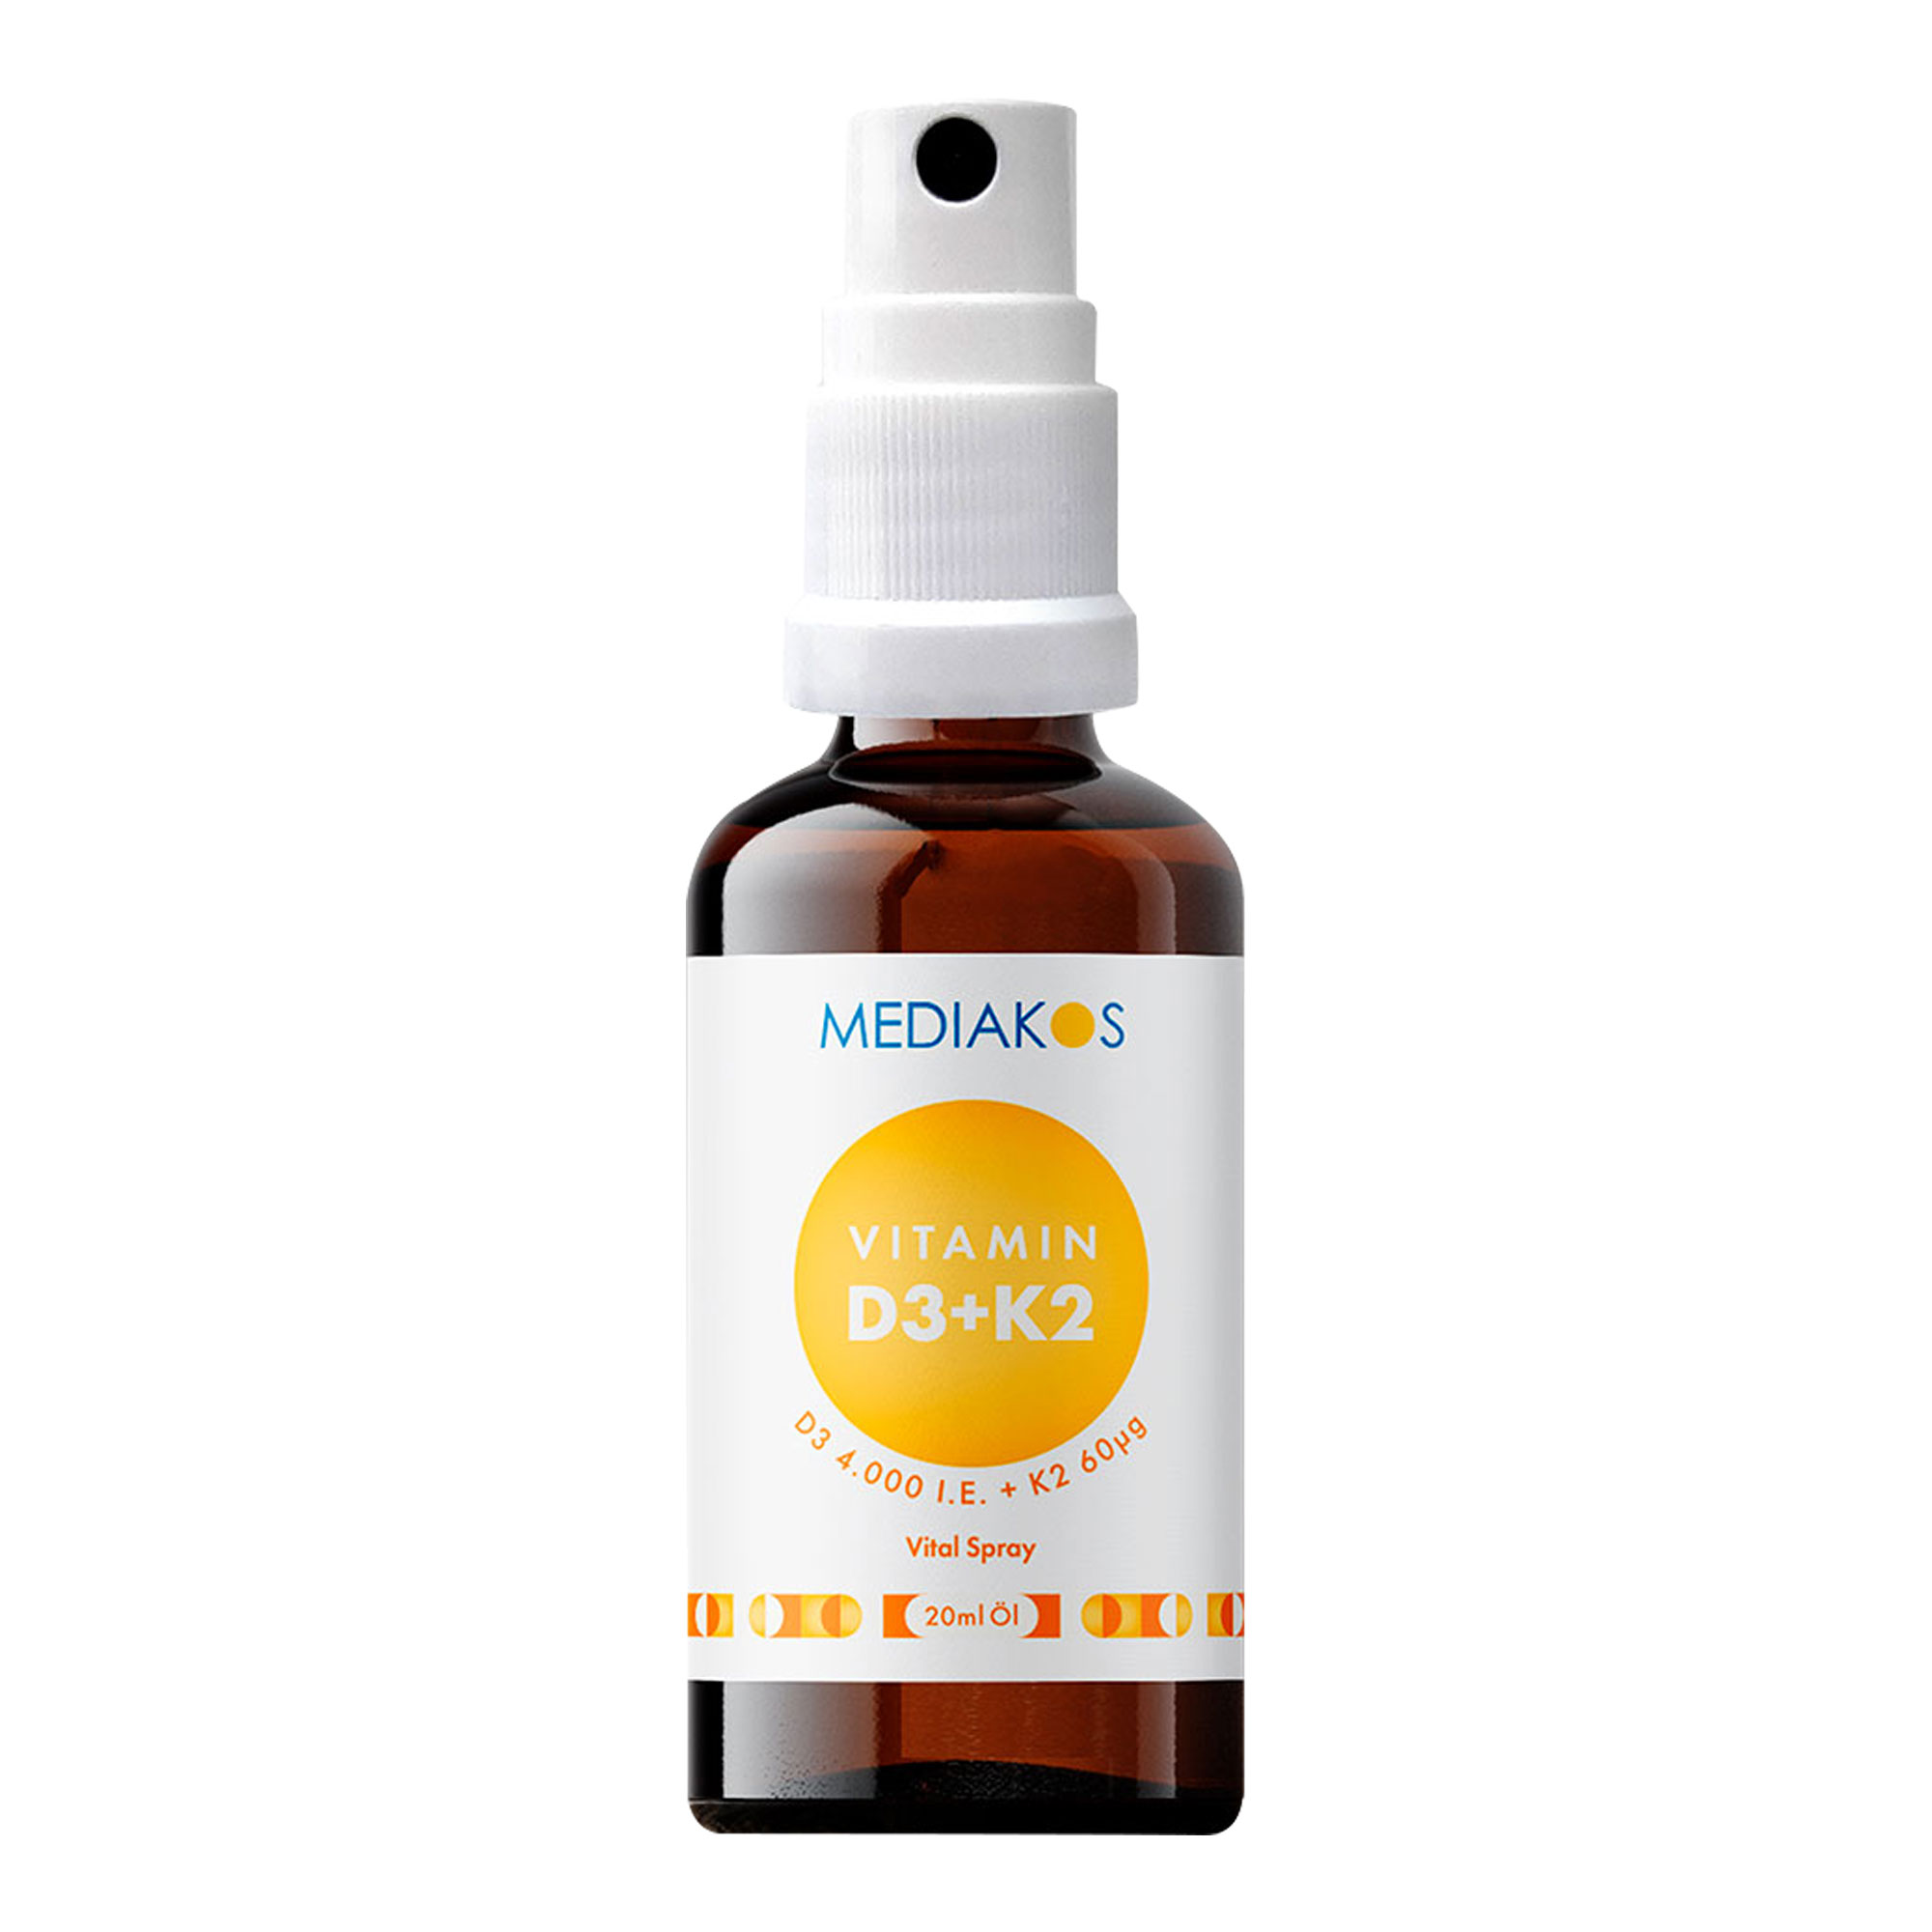 Mediakos Vitamin D3+K2 4.000 I.E. / 60 μg Vital Spray